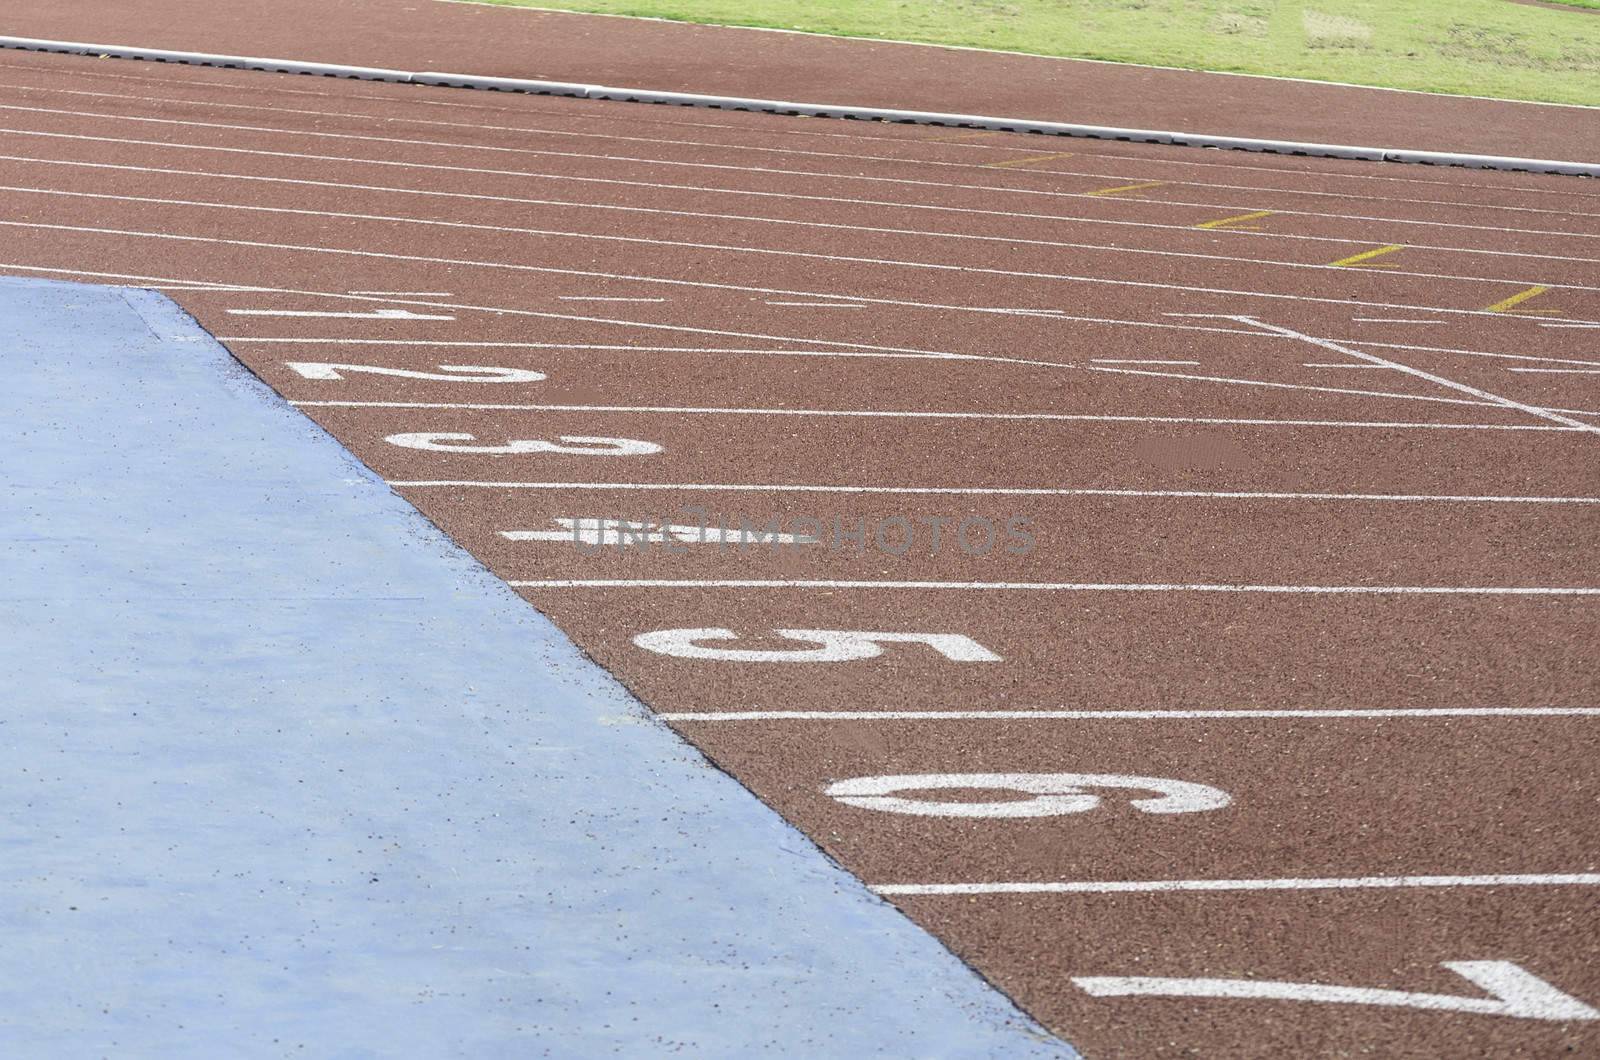 Running race track in the sport stadium